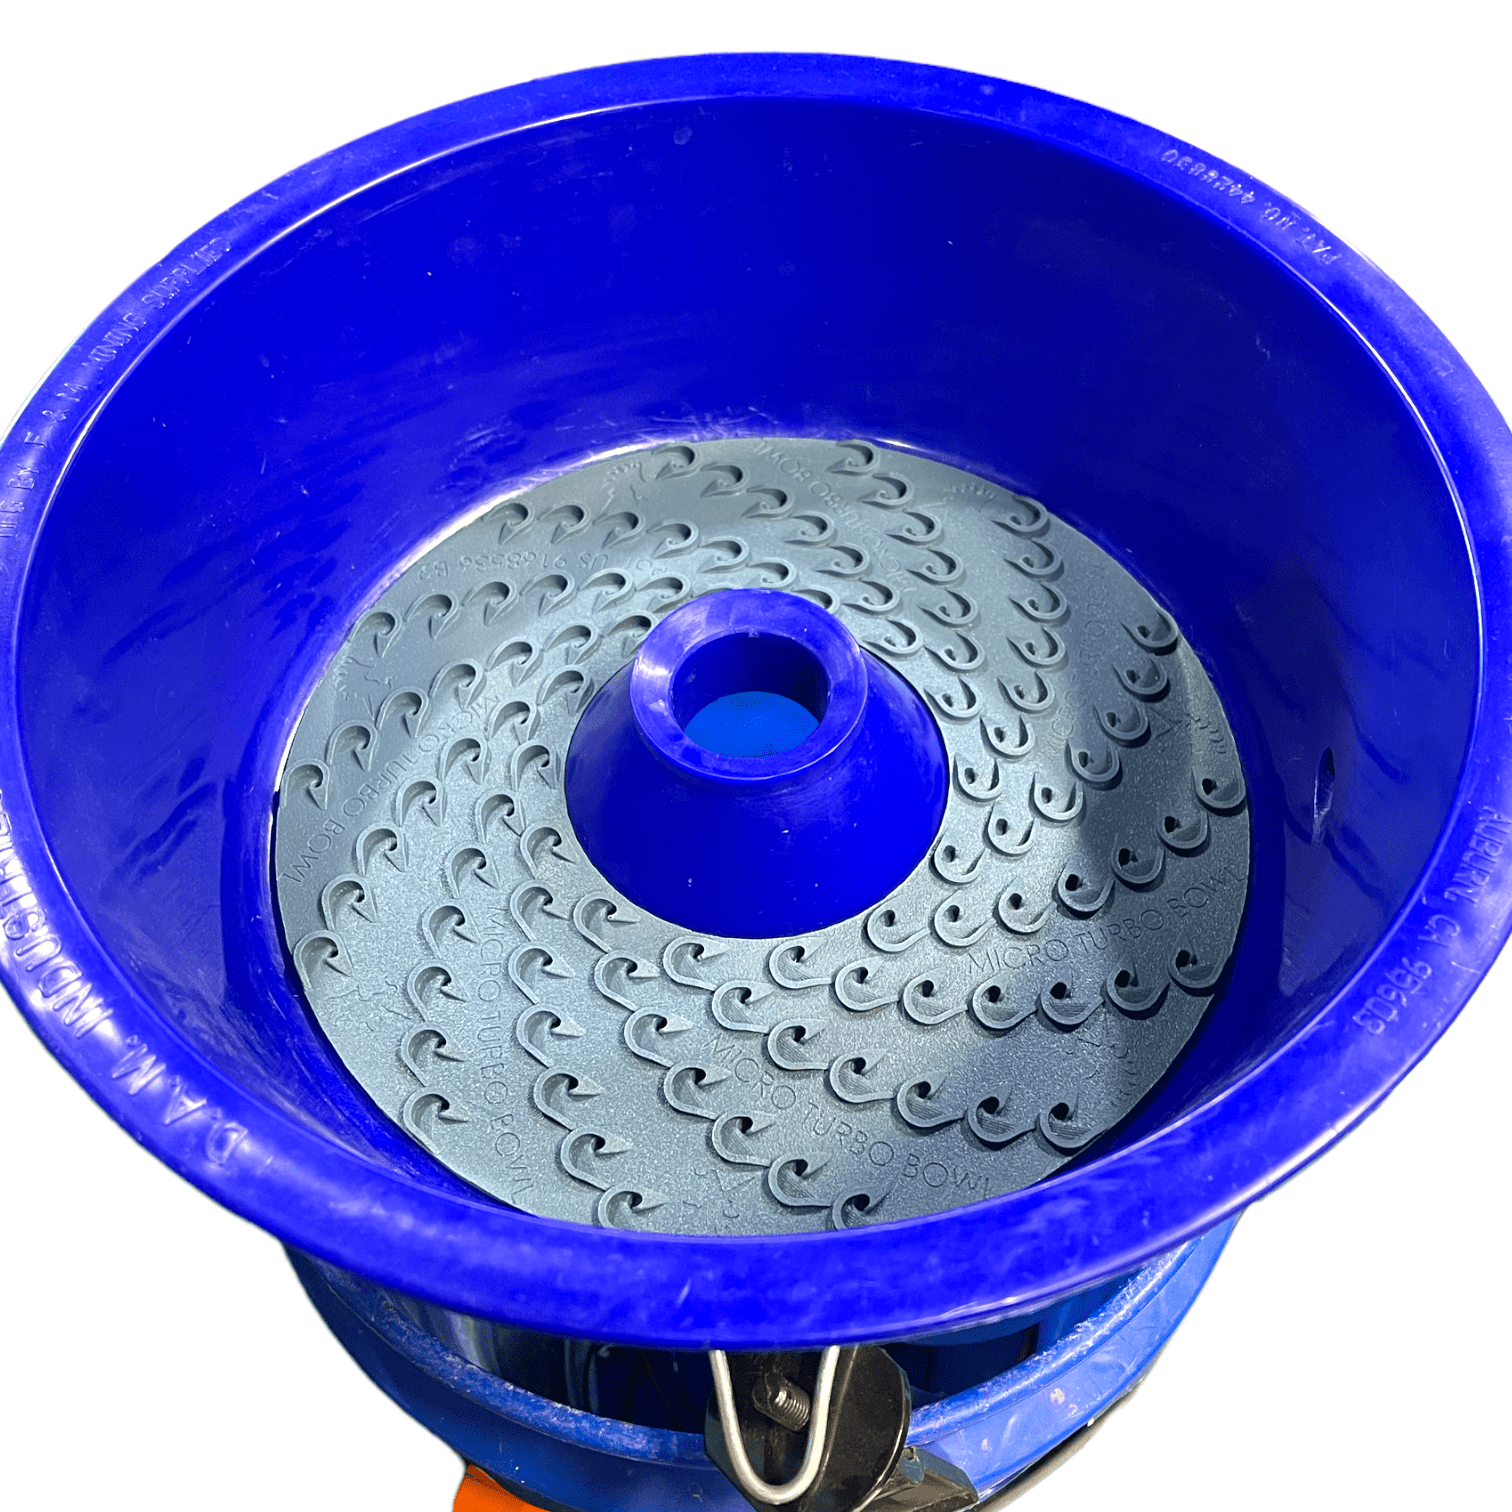 blue bowl gold prospecting bowl with prospectors dream mat insert